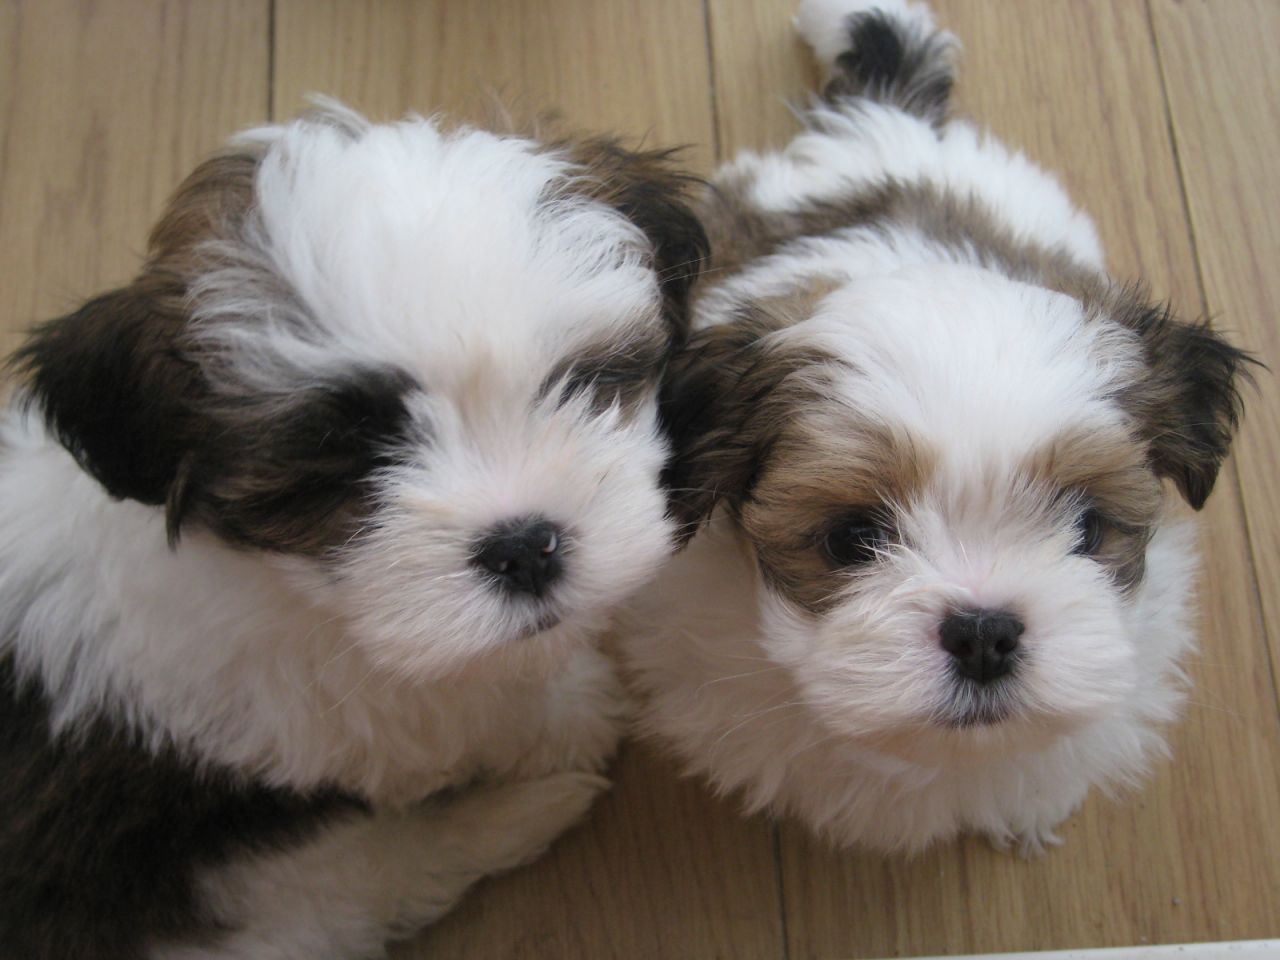 Adorable Lhasa Apso Puppies